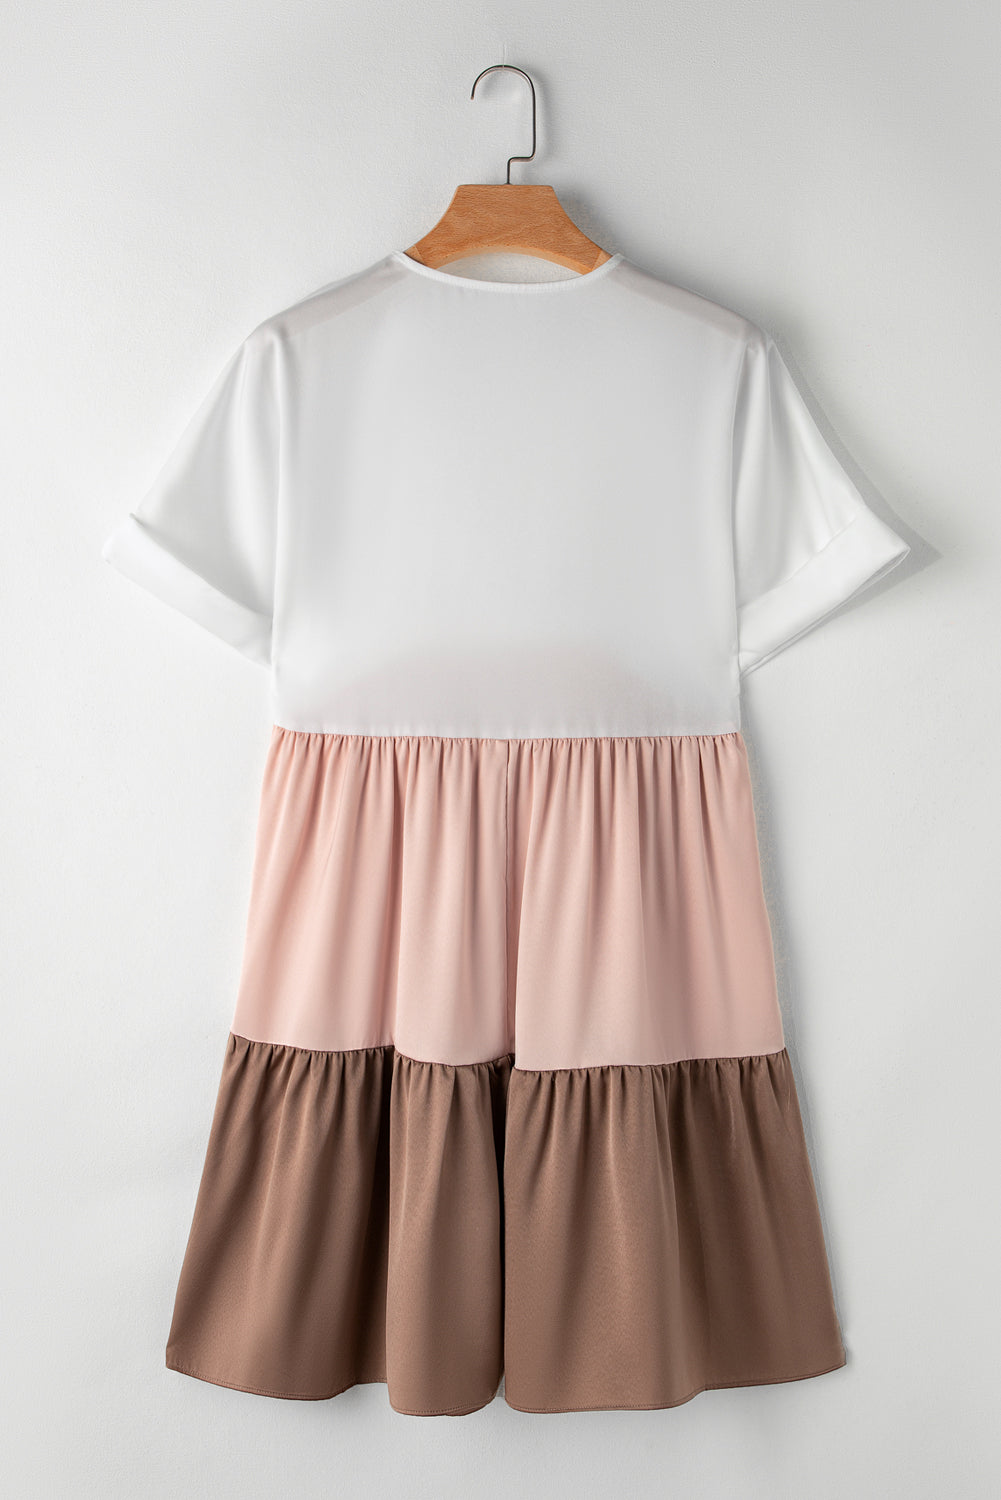 Bohemian Color Block Mini Dress |Pink and Beige Causal Summer Dress